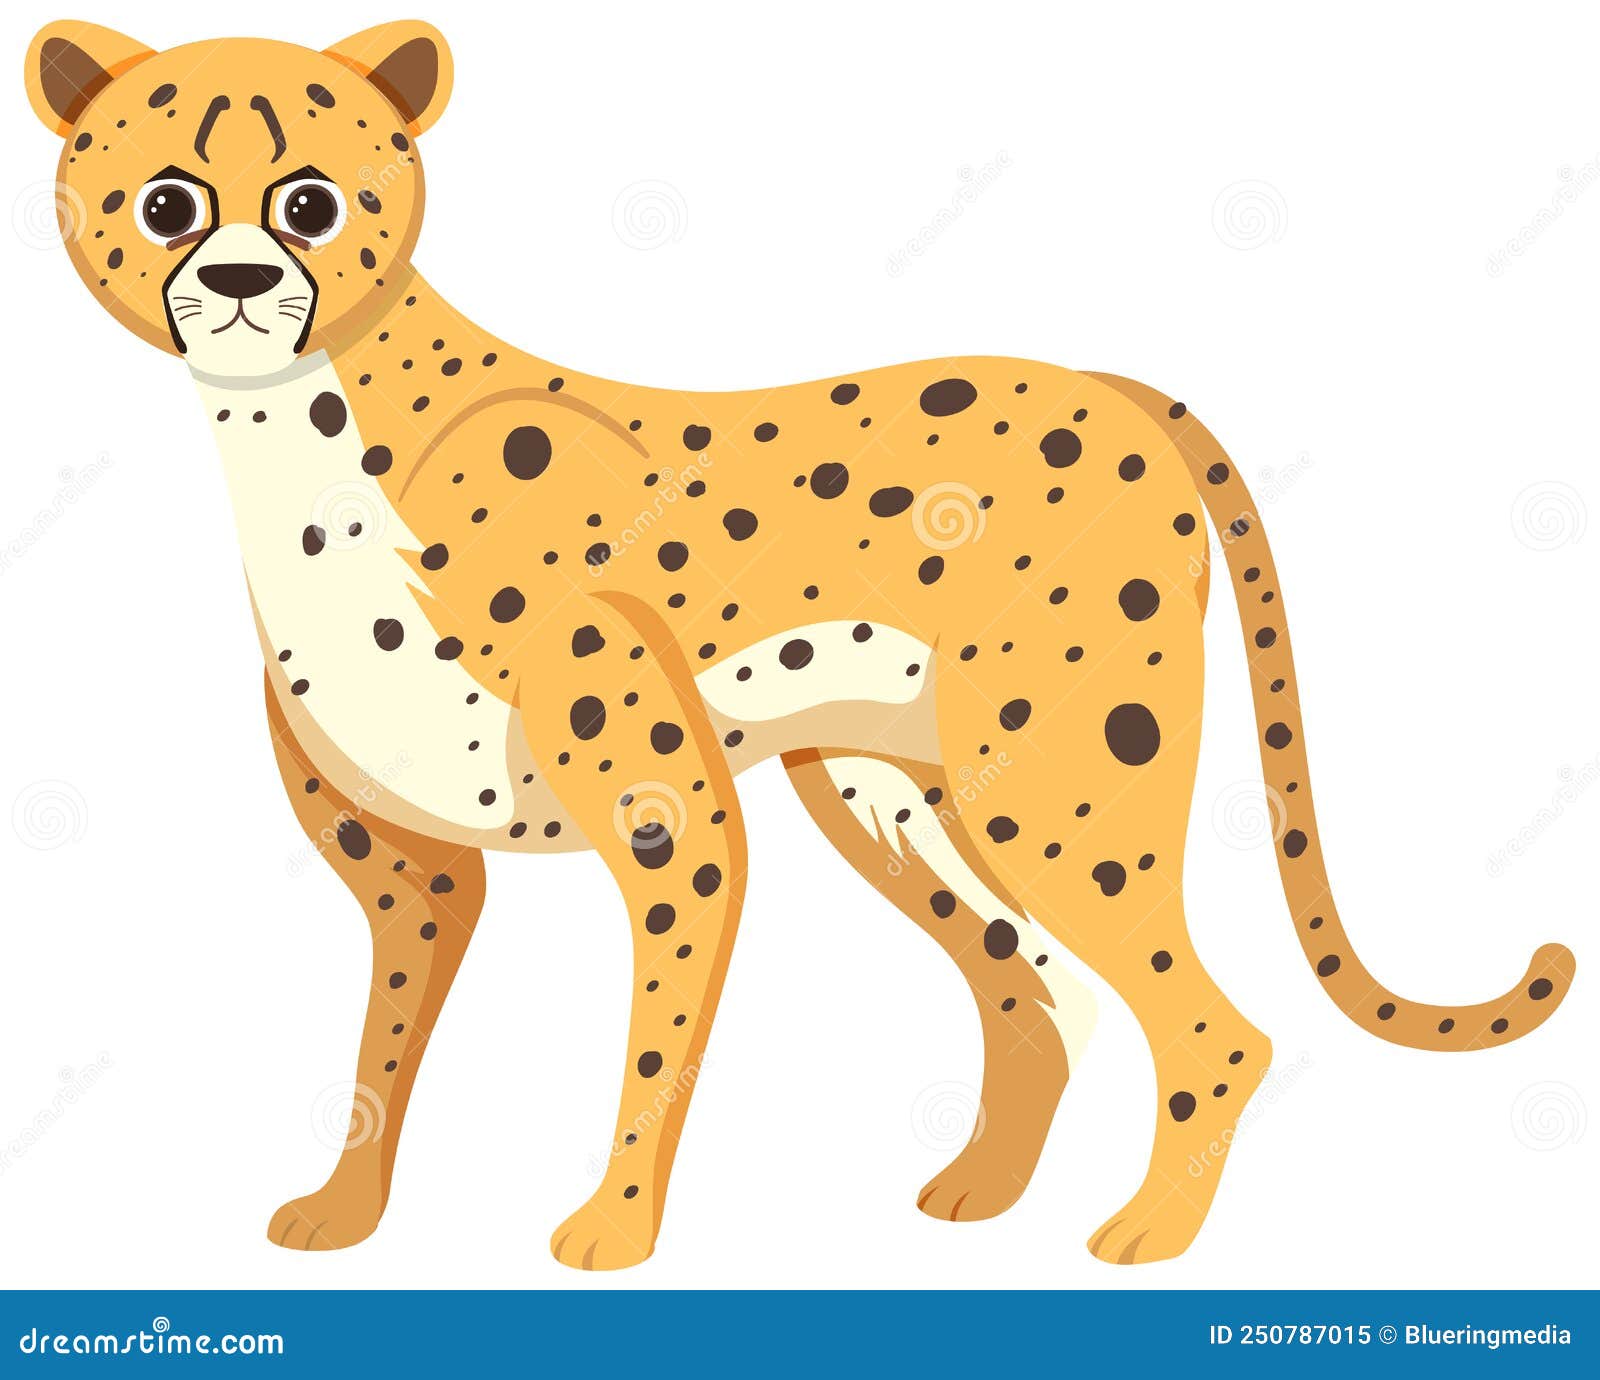 Cute Cheetah in Flat Cartoon Style Stock Vector - Illustration of cats ...